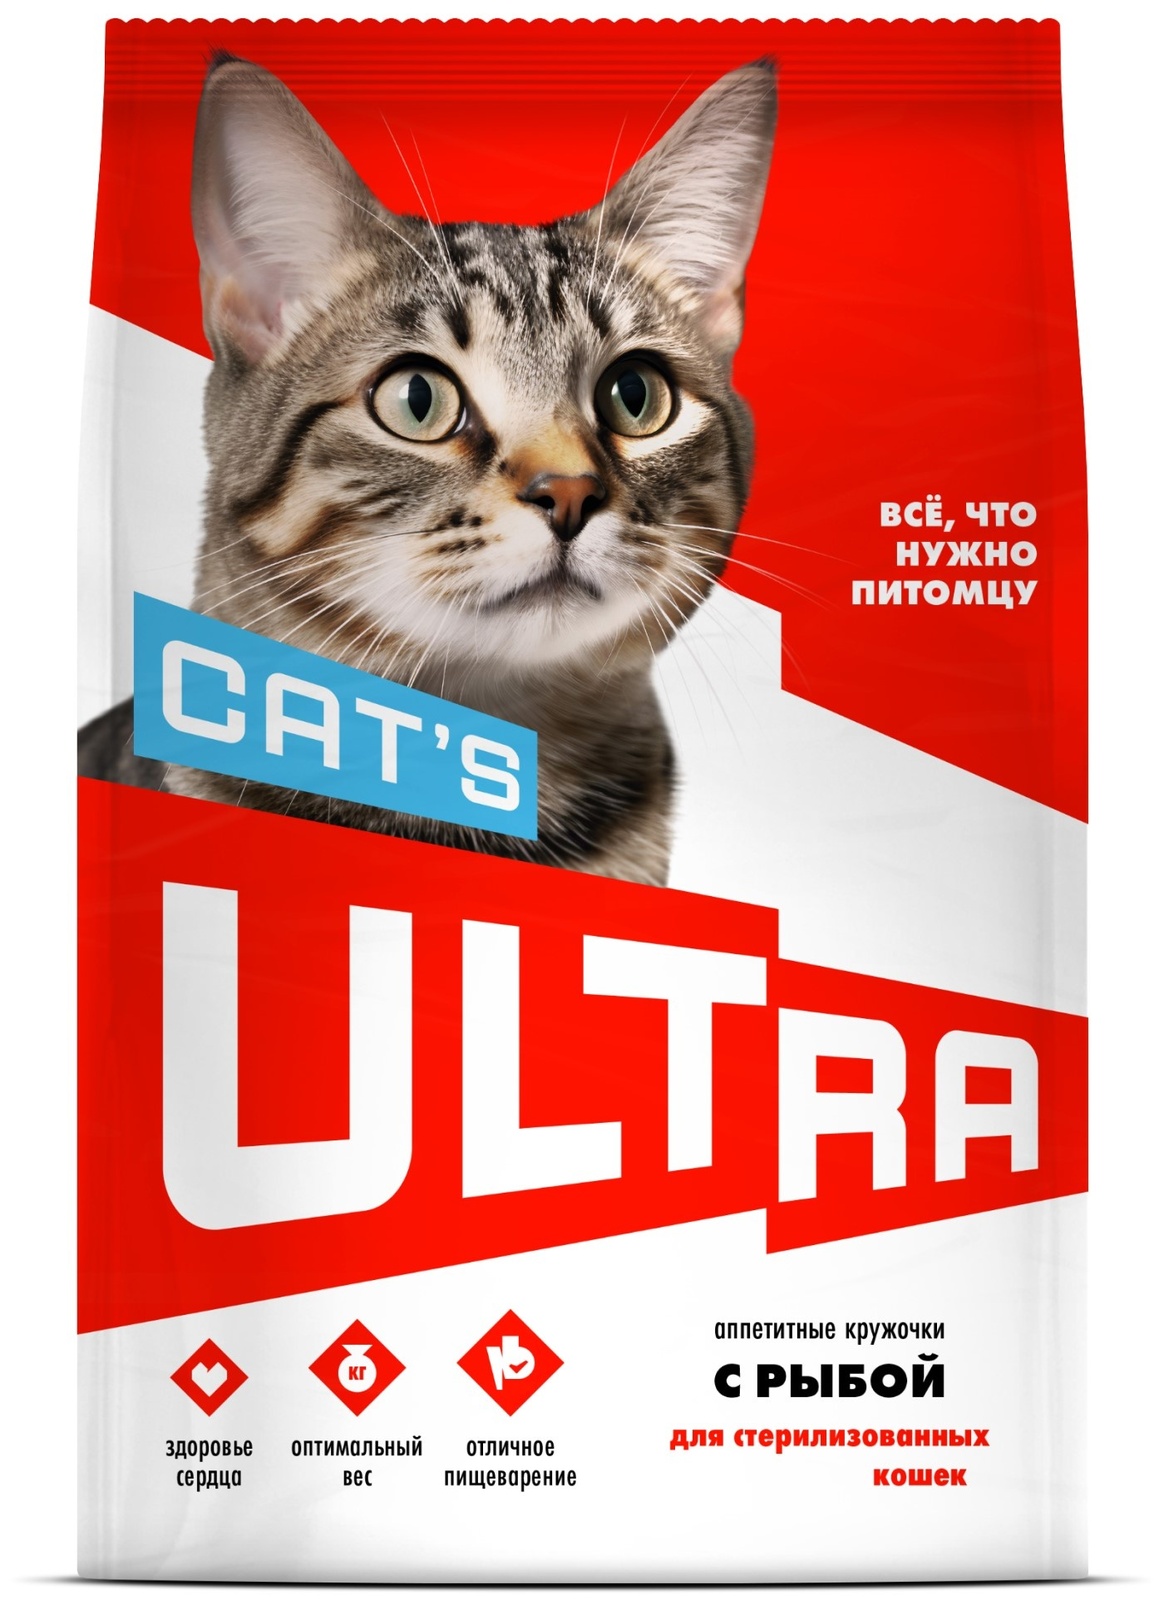 ULTRA аппетитные кружочки с рыбой для стерилизованных кошек (1,5 кг) ULTRA аппетитные кружочки с рыбой для стерилизованных кошек (1,5 кг) - фото 1